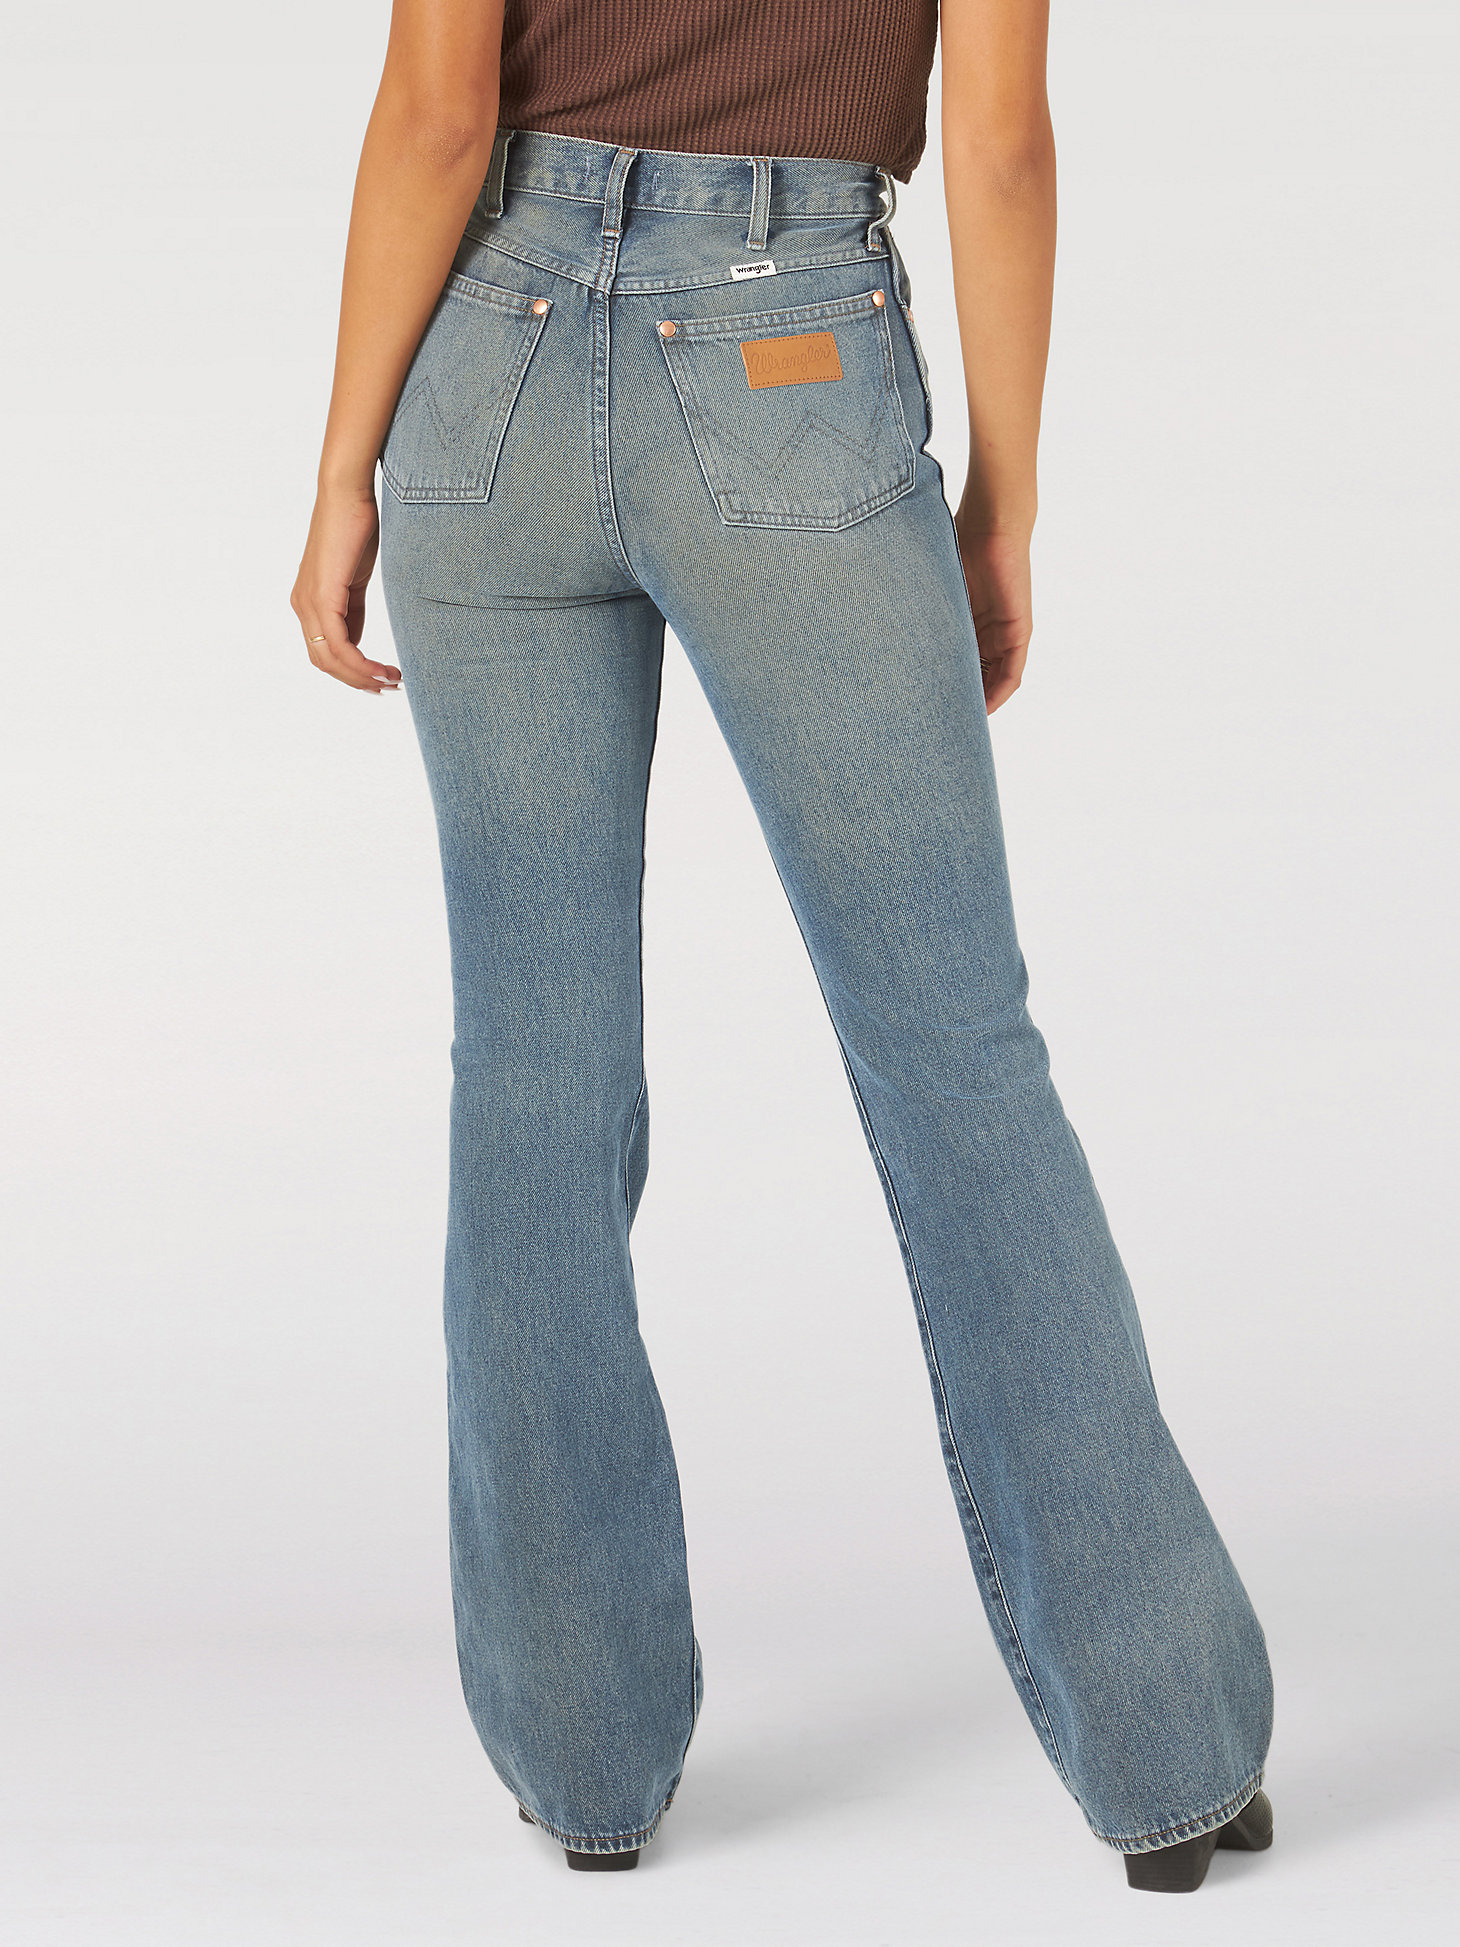 Women's Wrangler® Westward 626 High Rise Bootcut Jean in Peach Tint alternative view 1